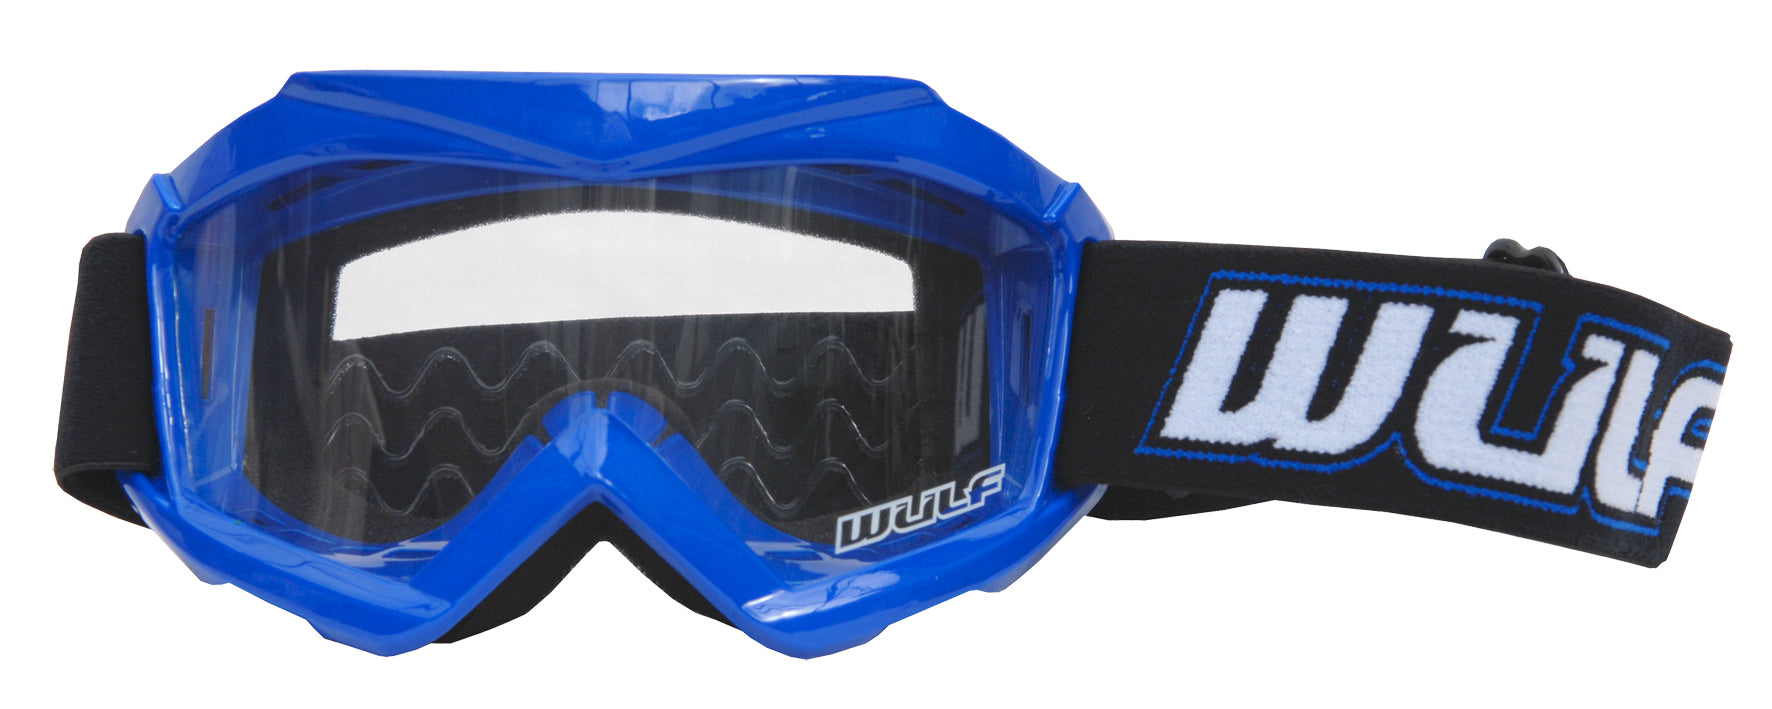 wulfsport-cub-tech-goggles-for-mx-enduro---blue